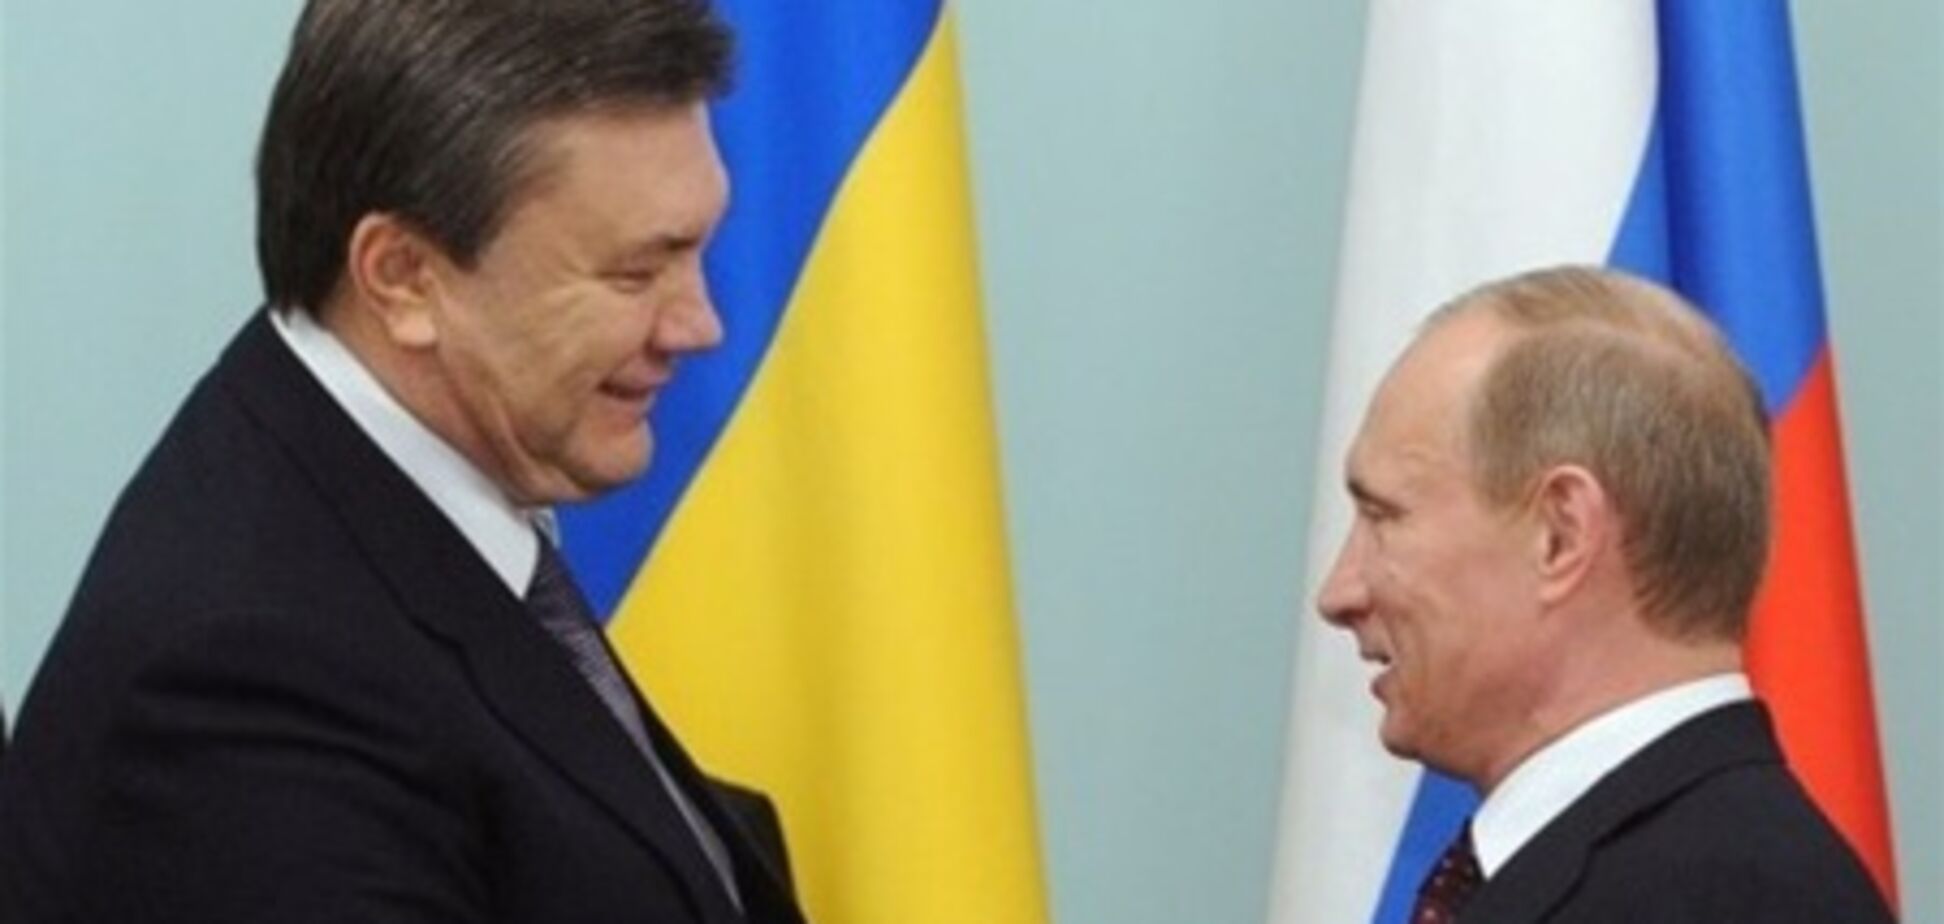 Путин и Янукович совершили совместную прогулку по резиденции Медведева 